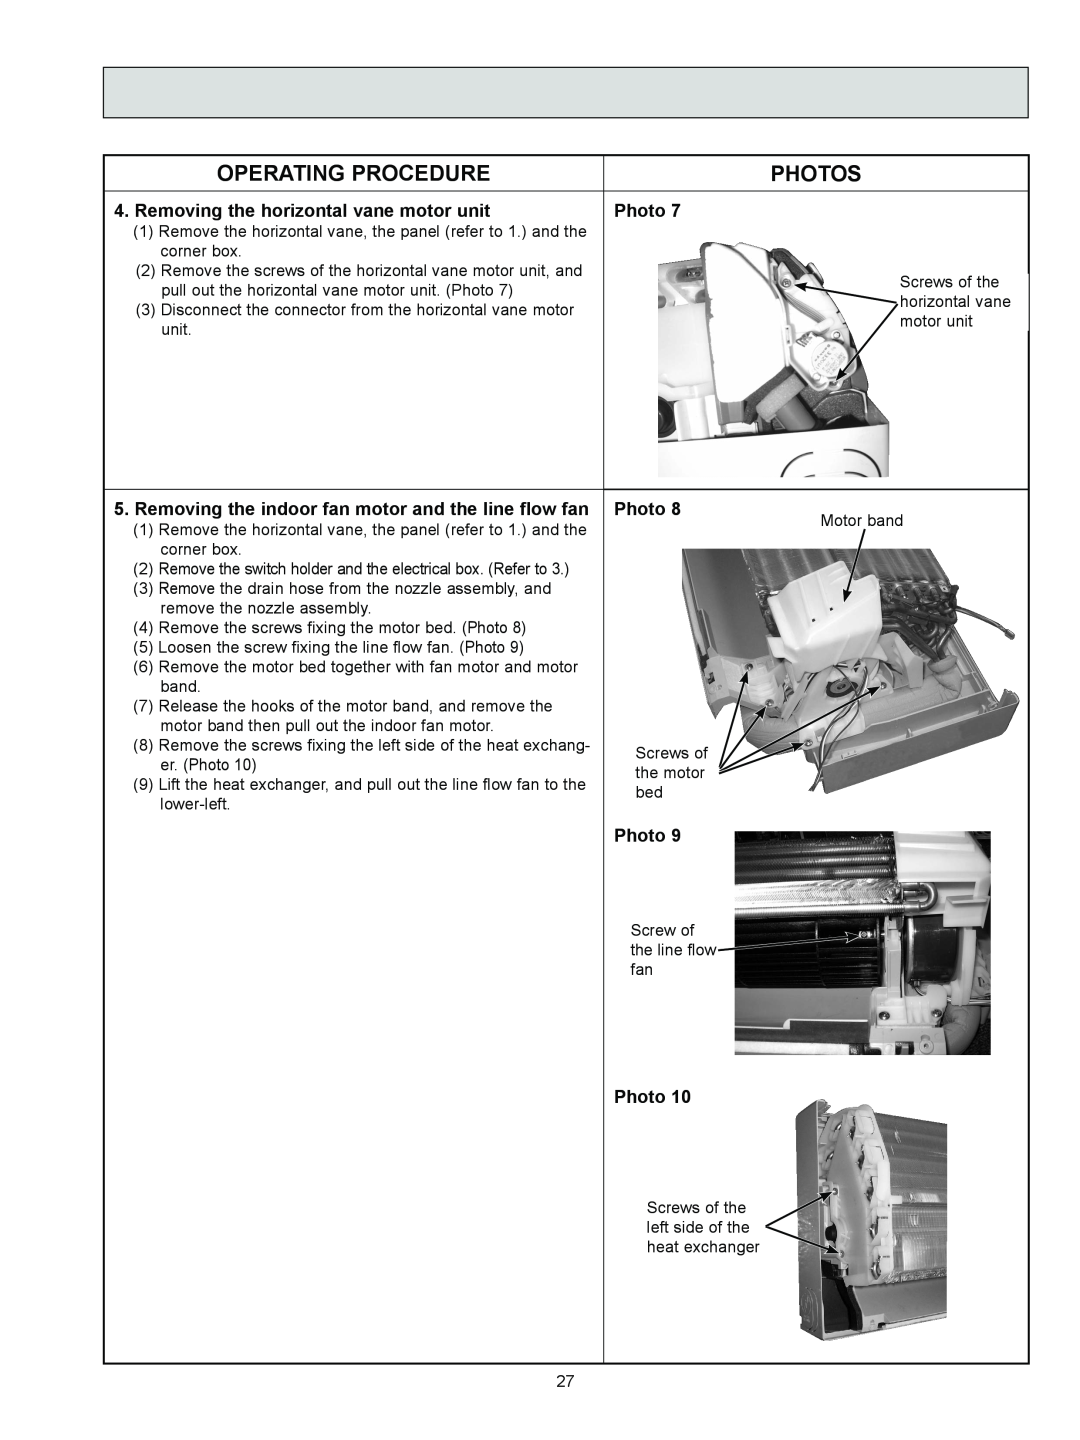 Logitech MSZ-A09NA, OB450 REVISED EDITION-B Removing the horizontal vane motor unit, Operating Procedure, Photos 